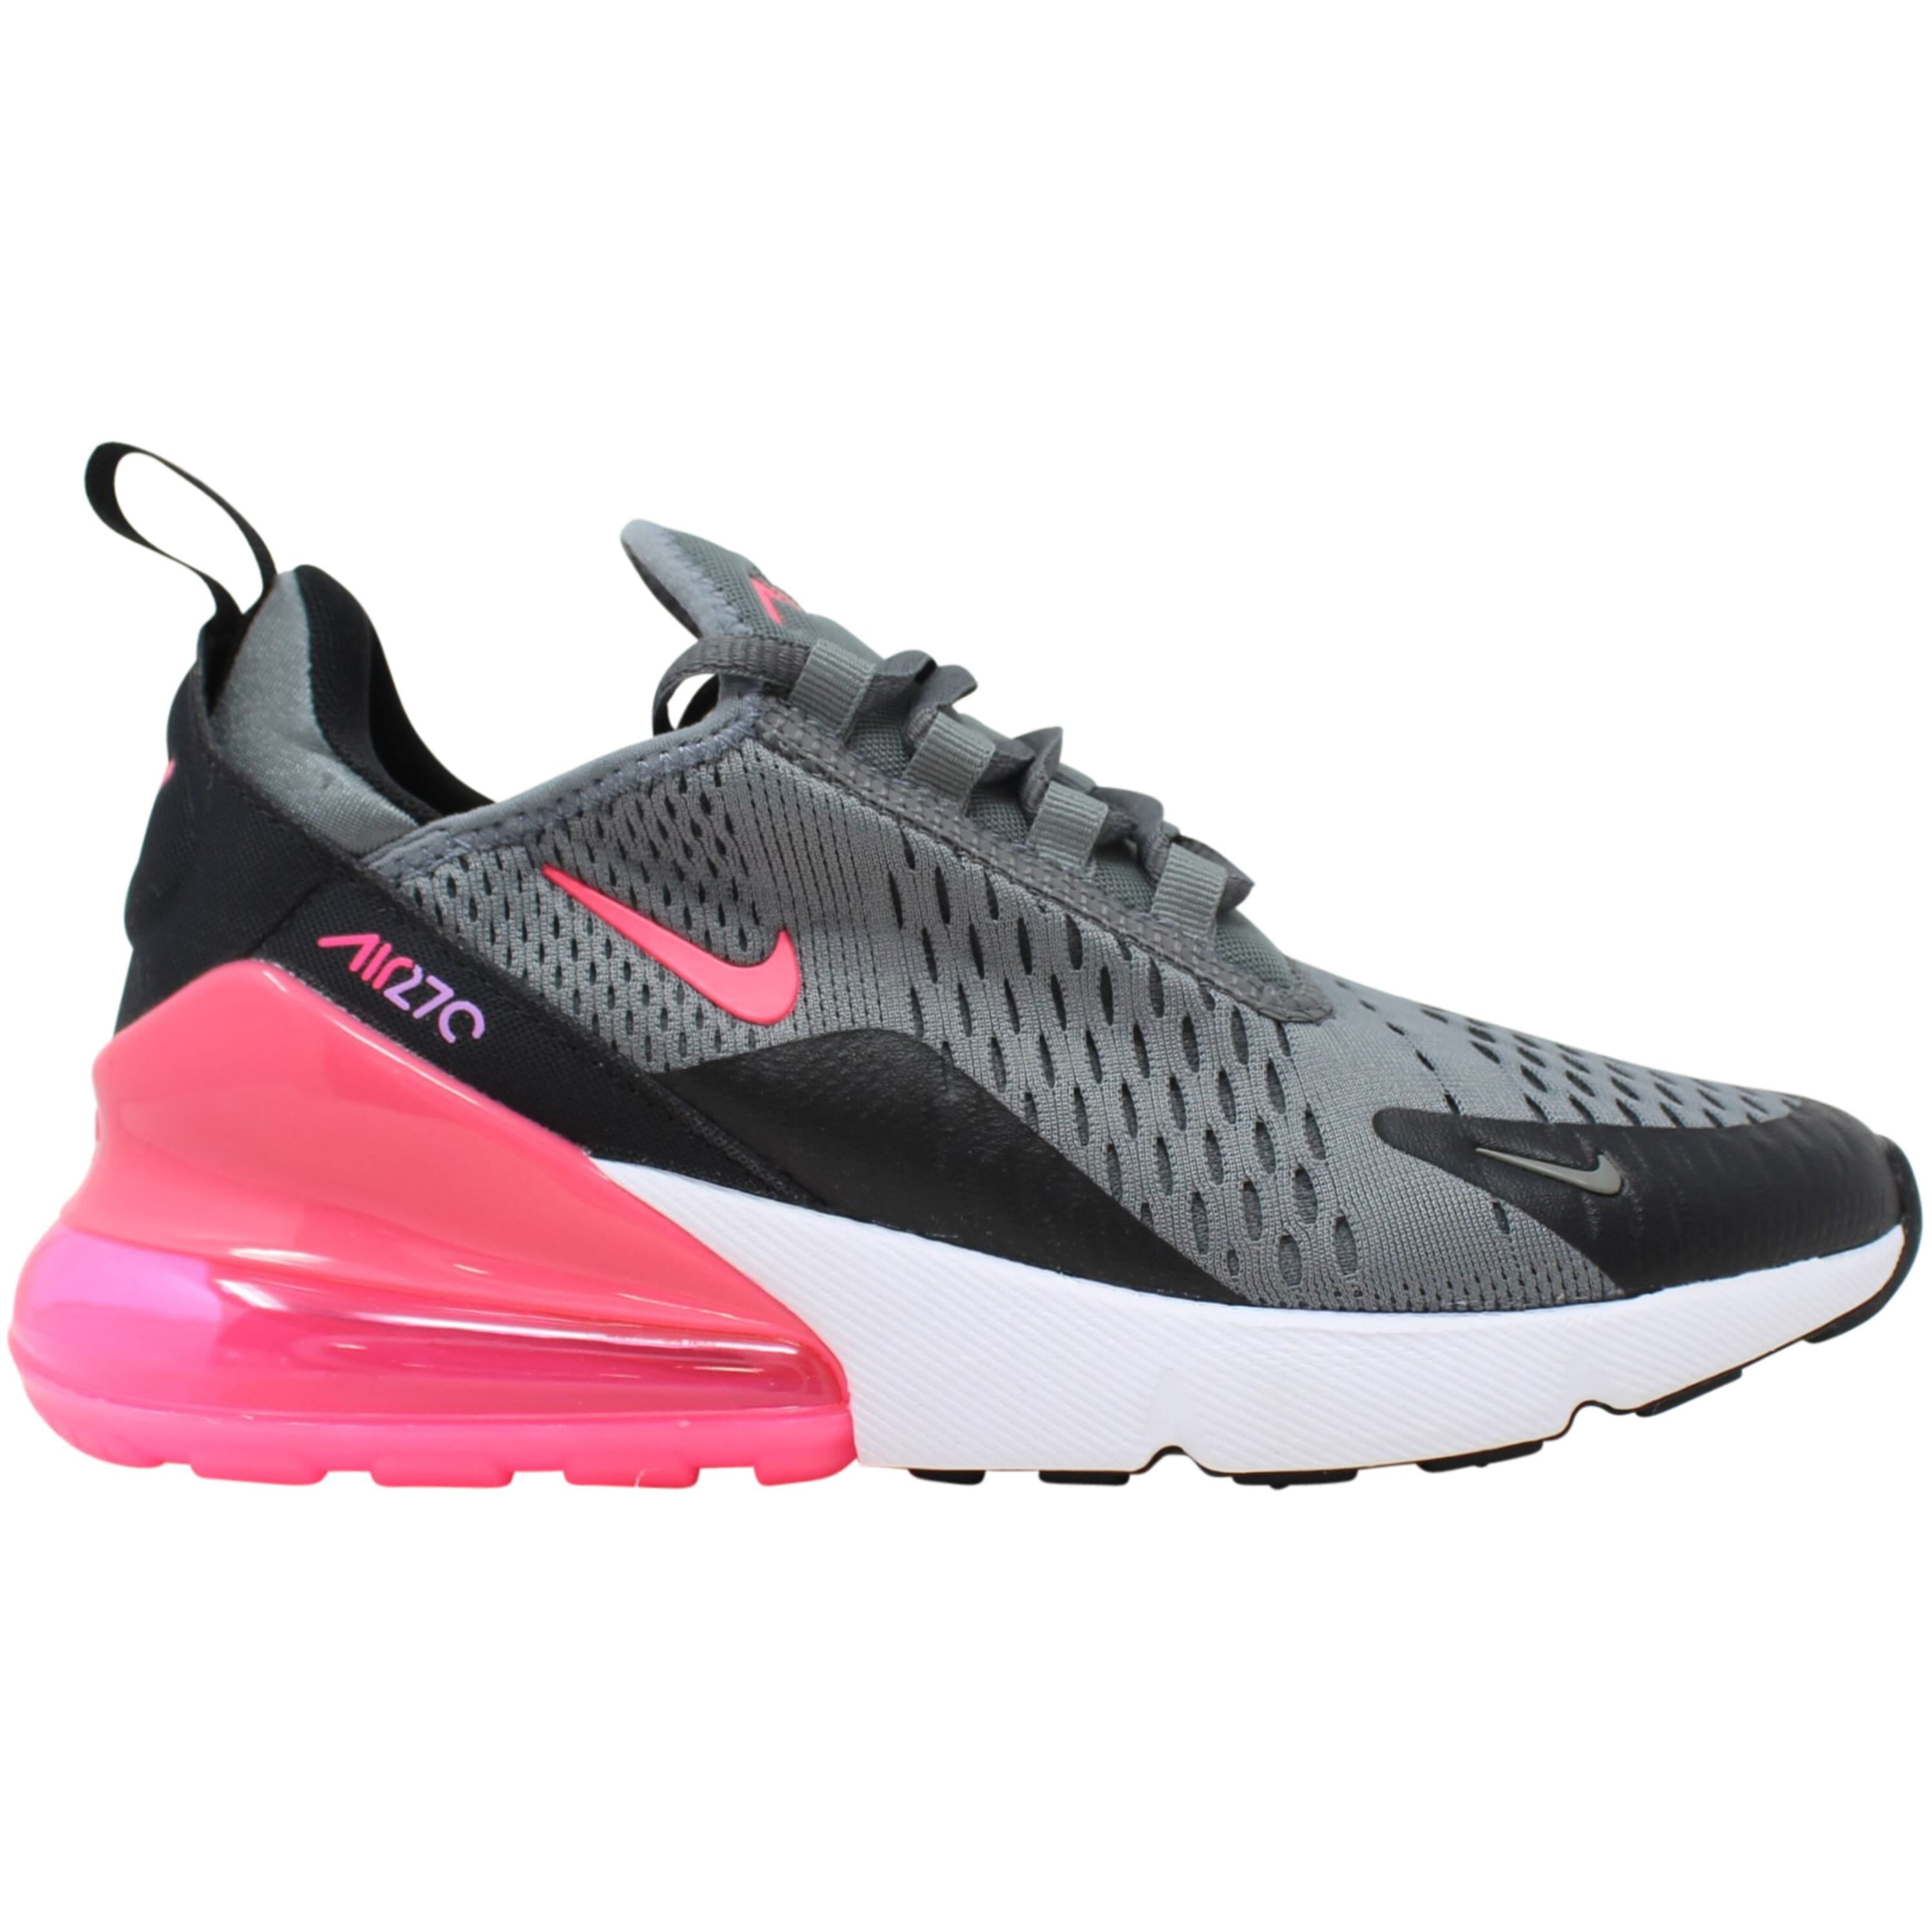 Nike Air 270 Smoke Pink-Black 943345-031 Size 5.5Y Medium - Walmart.com